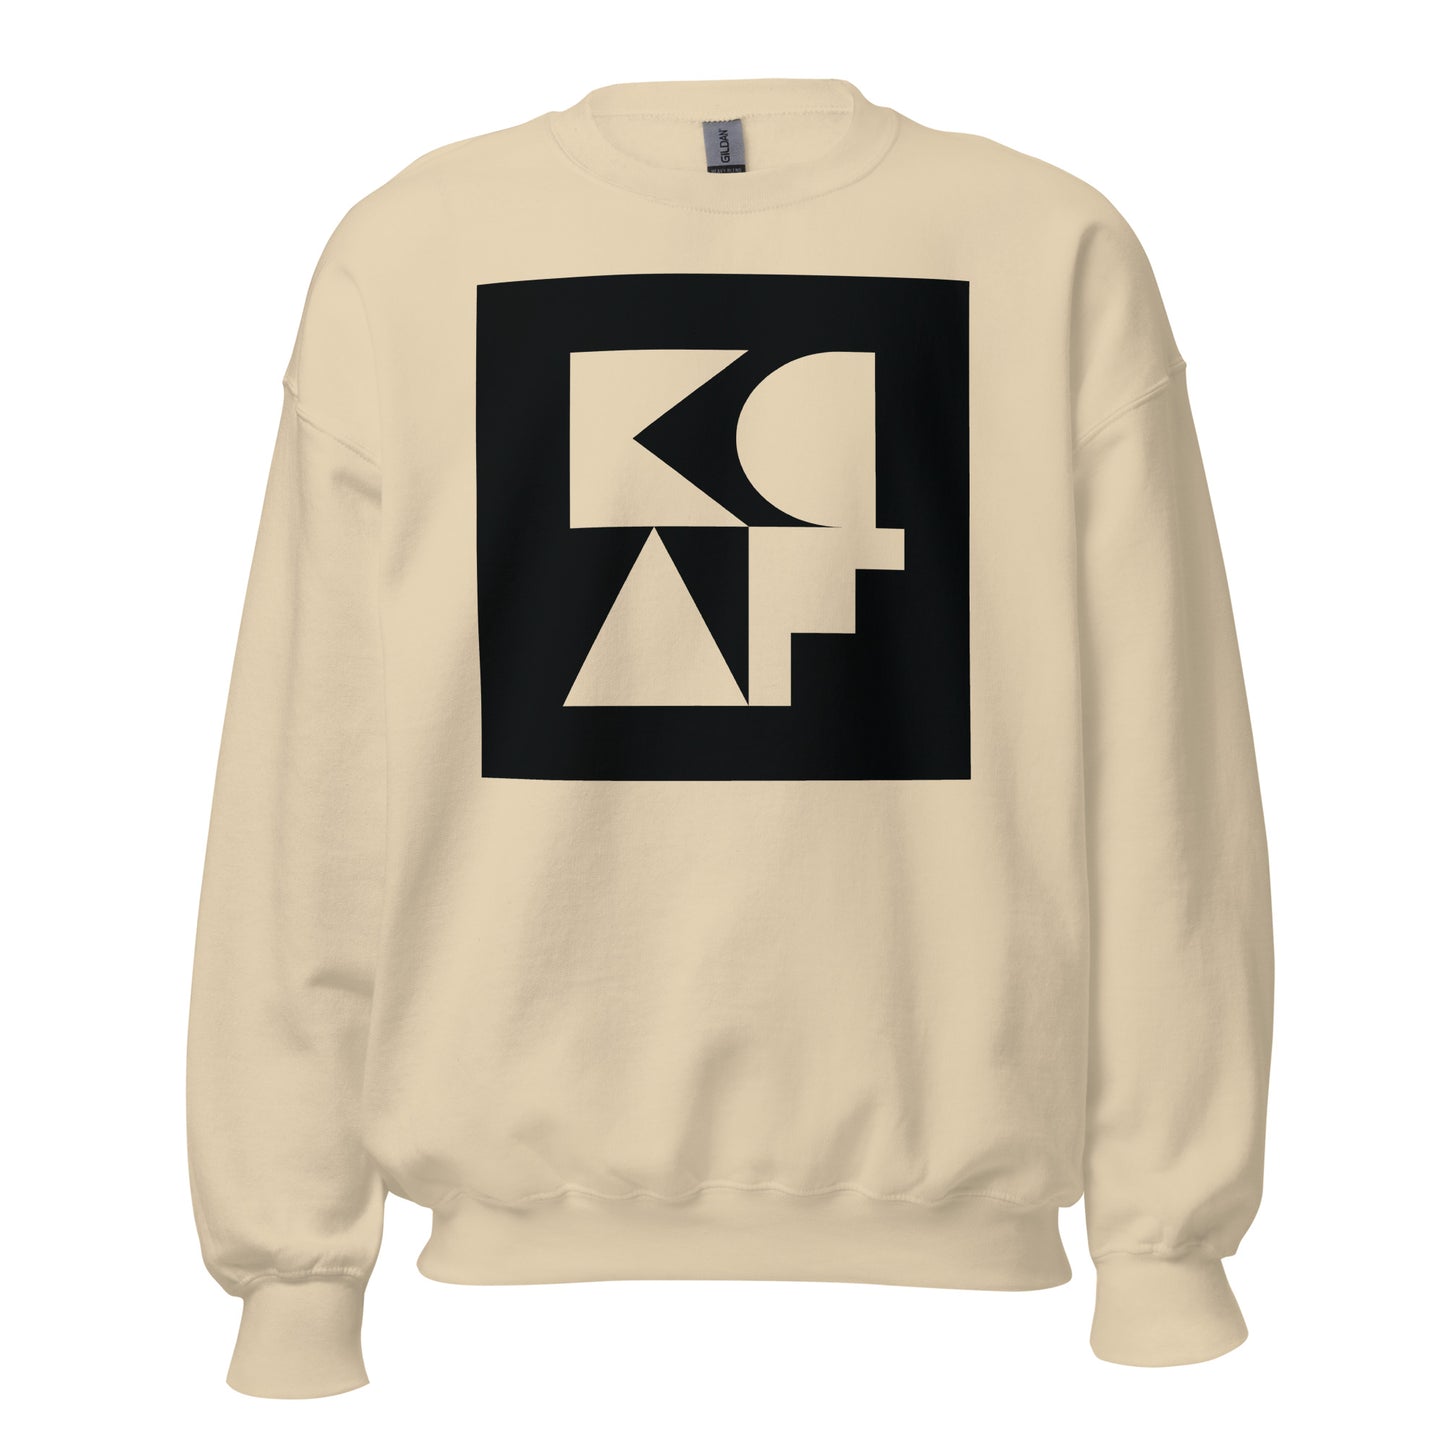 KC Action Fund Adult Sweatshirt